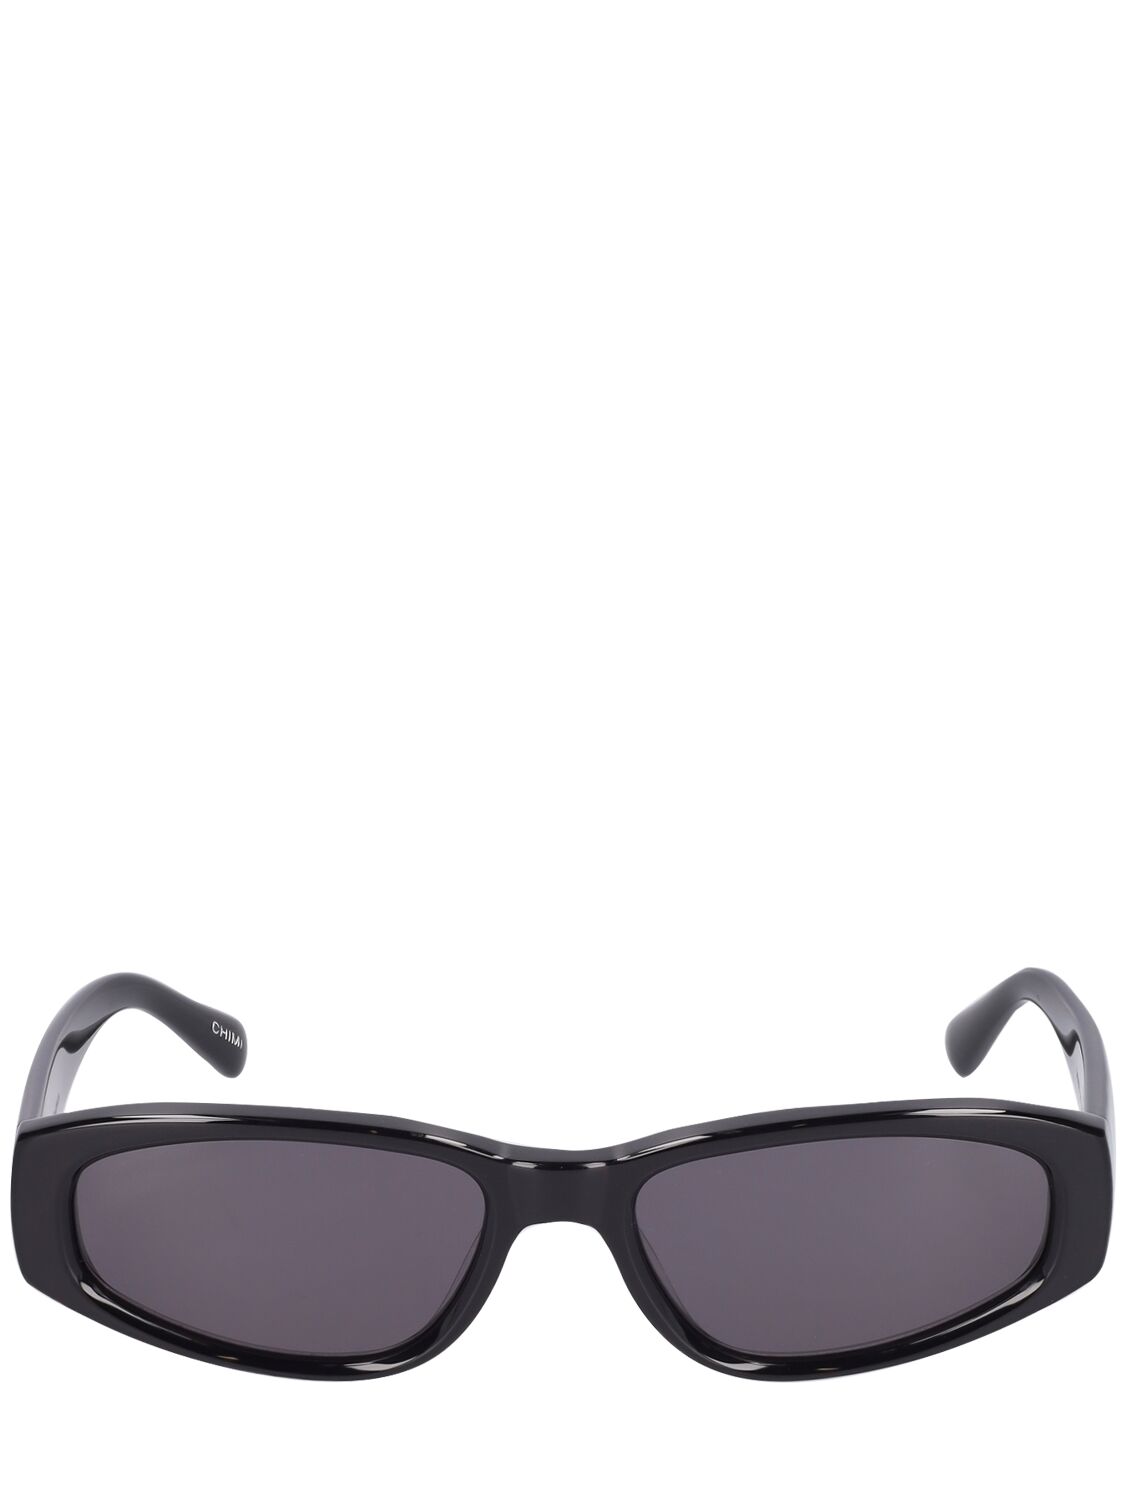 Chimi 09.2 Squared Acetate Sunglasses In Black